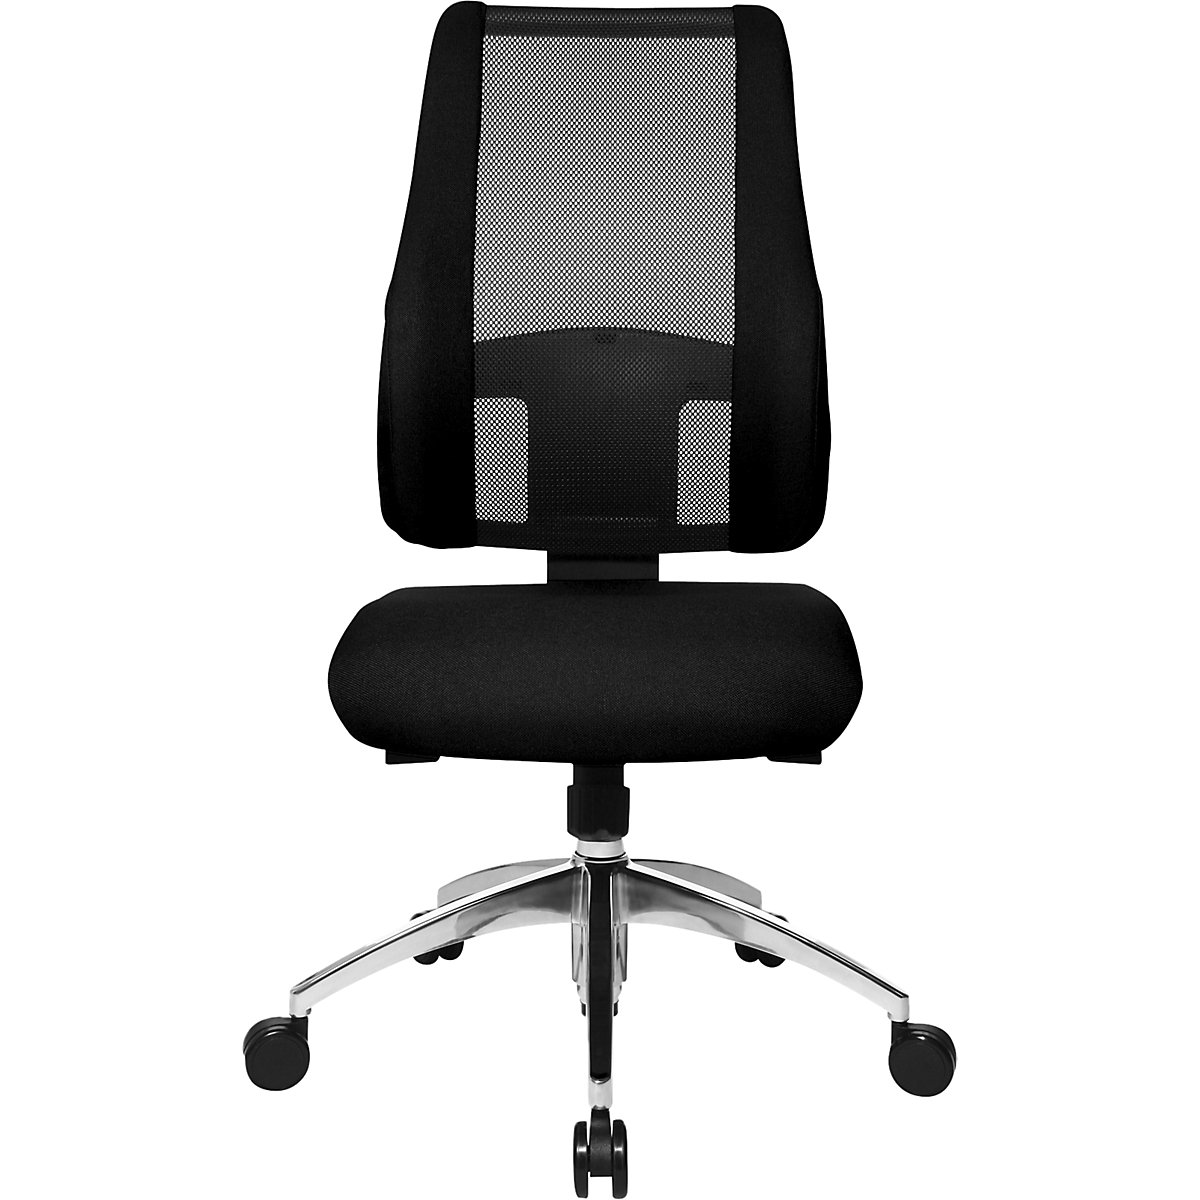 AIR SYNCRO office swivel chair - Topstar